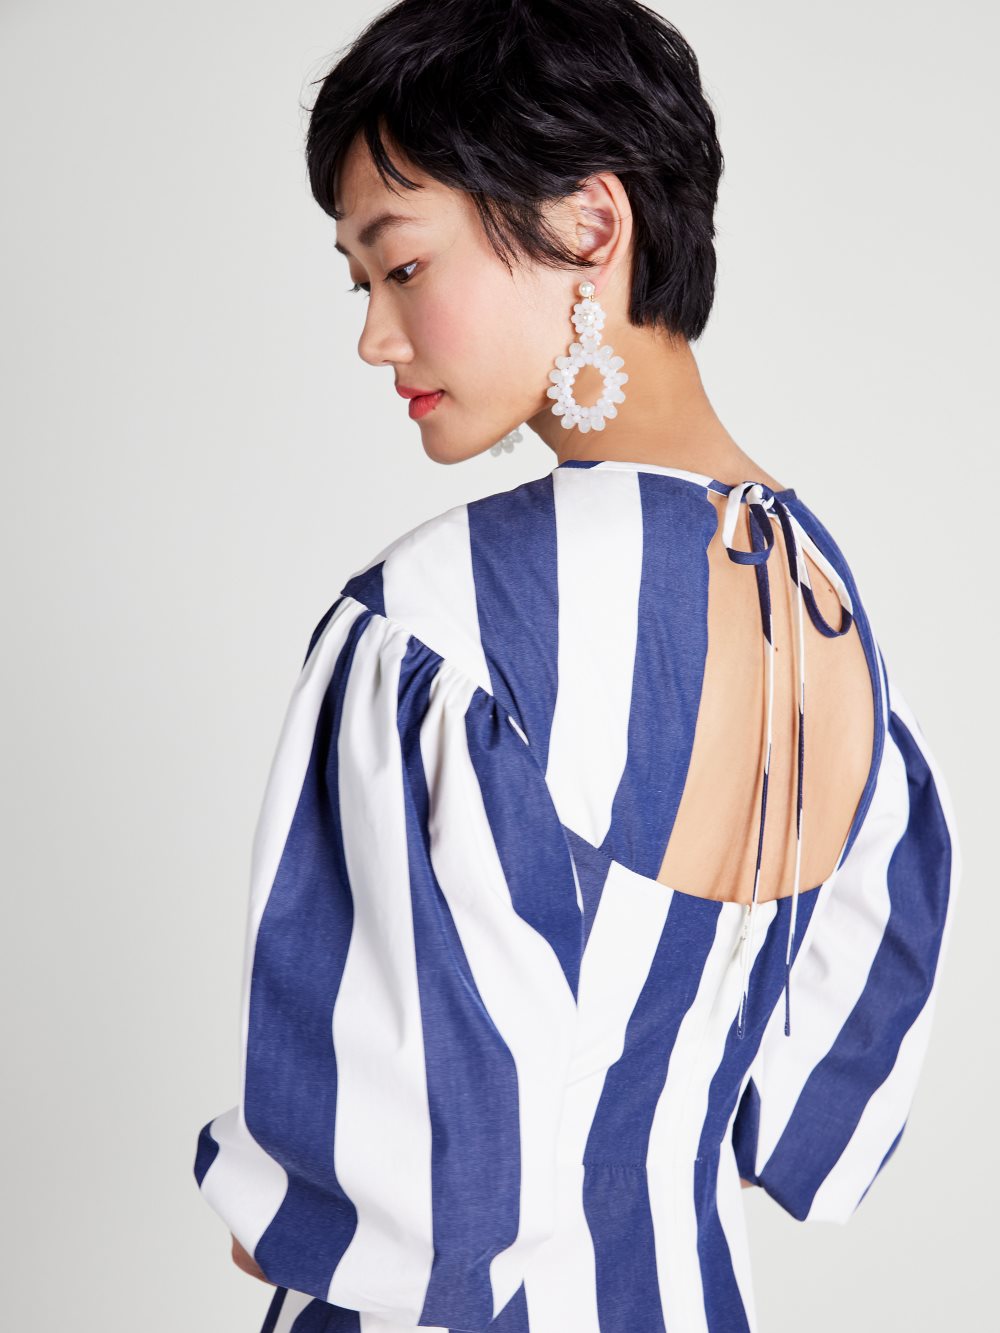 Women's  blazer blue  awning stripe tie-back maxi dress | Kate Spade